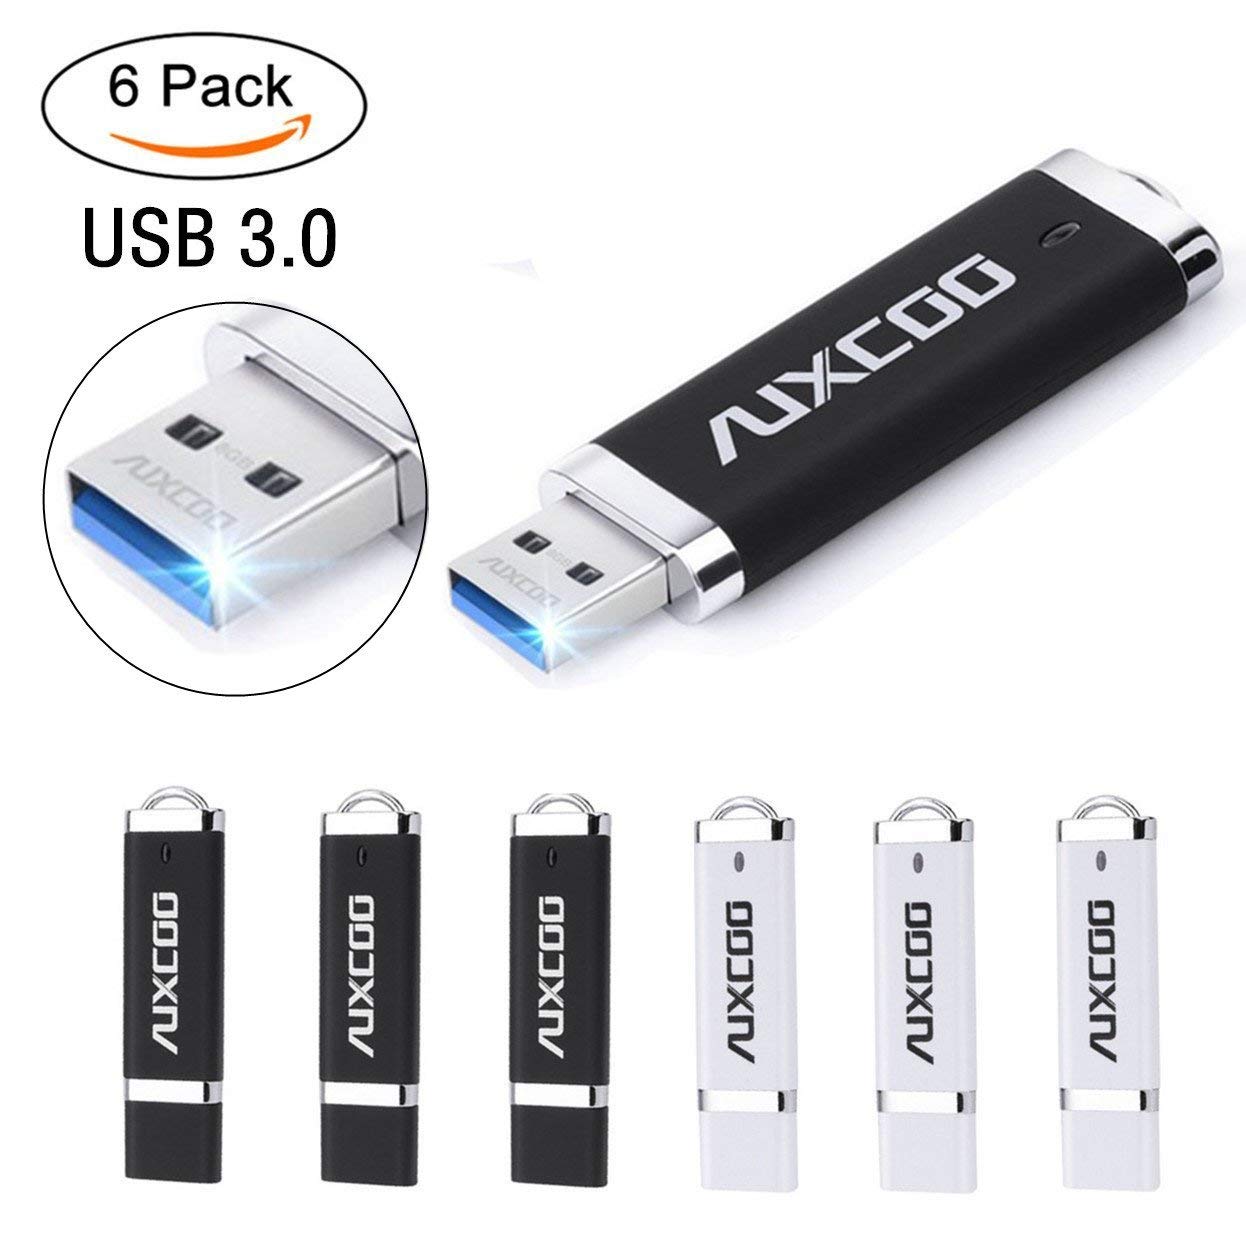 AUXCOO UB59 USB 3.0 Super Speed Flash Drive (6 Pack, Black + White)